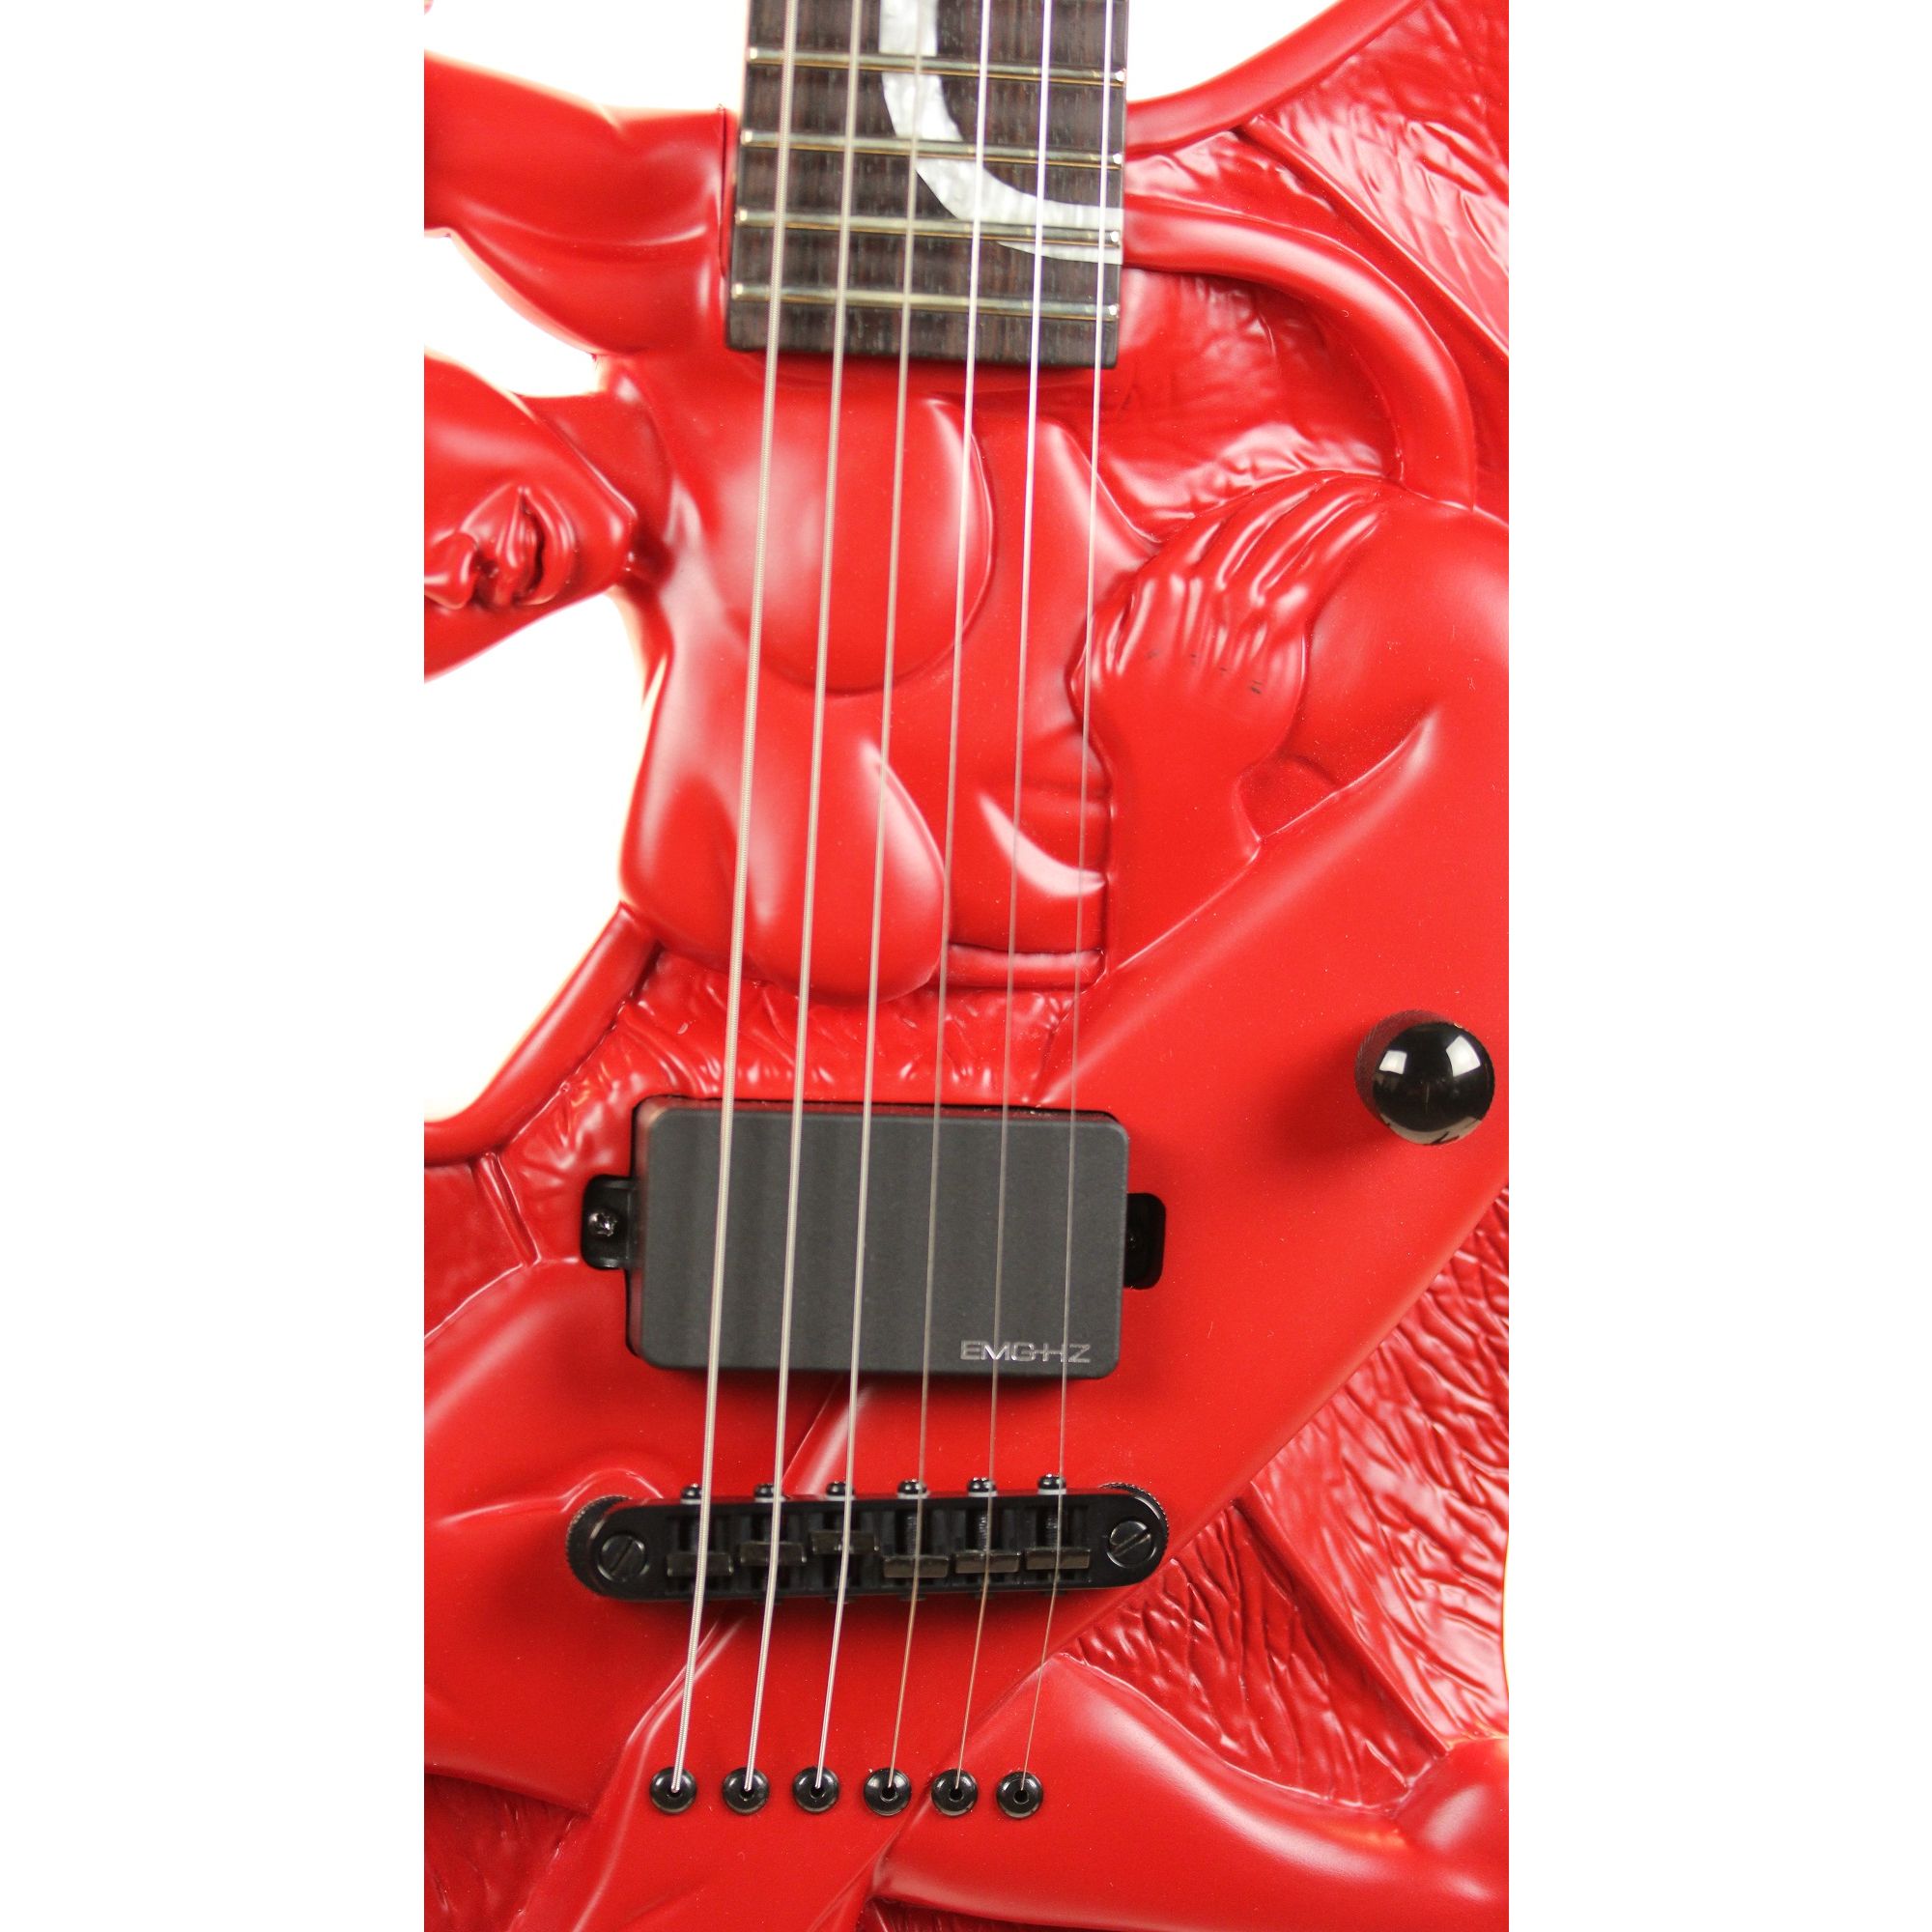 LTD - [DEVIL GIRL] Chitarra elettrica Fiesta Red Satin Rosewood